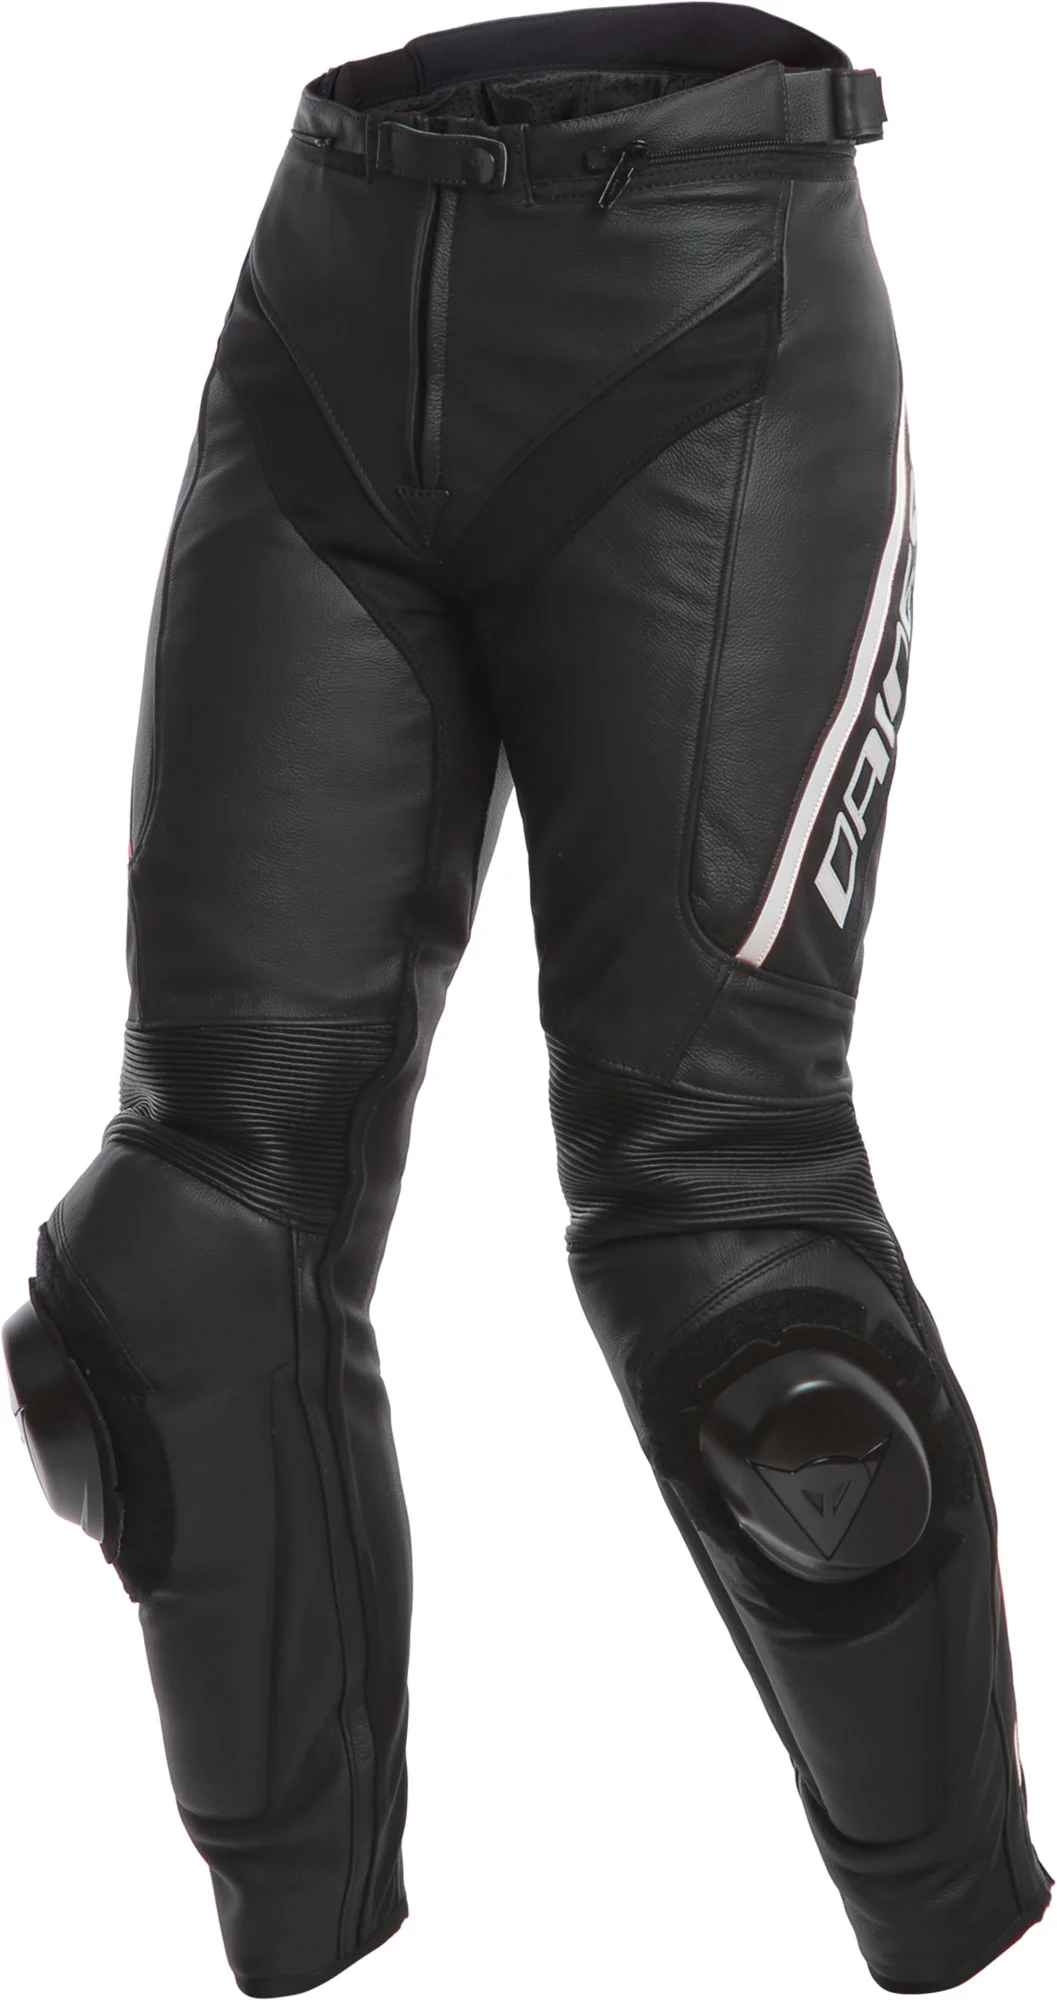 Pantalon en cuir Dainese DELTA 3 noir blanc (raccourci-rallongé